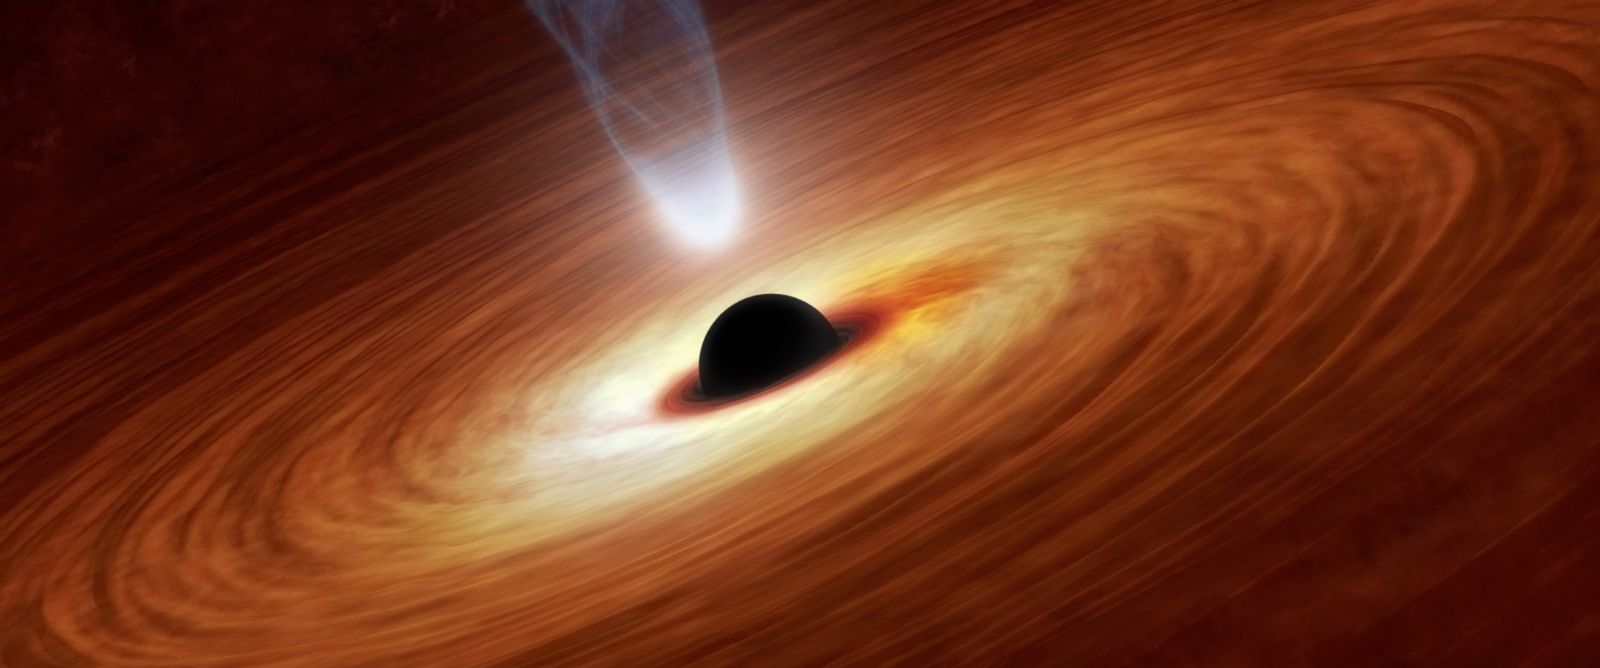 Quasar Black Hole